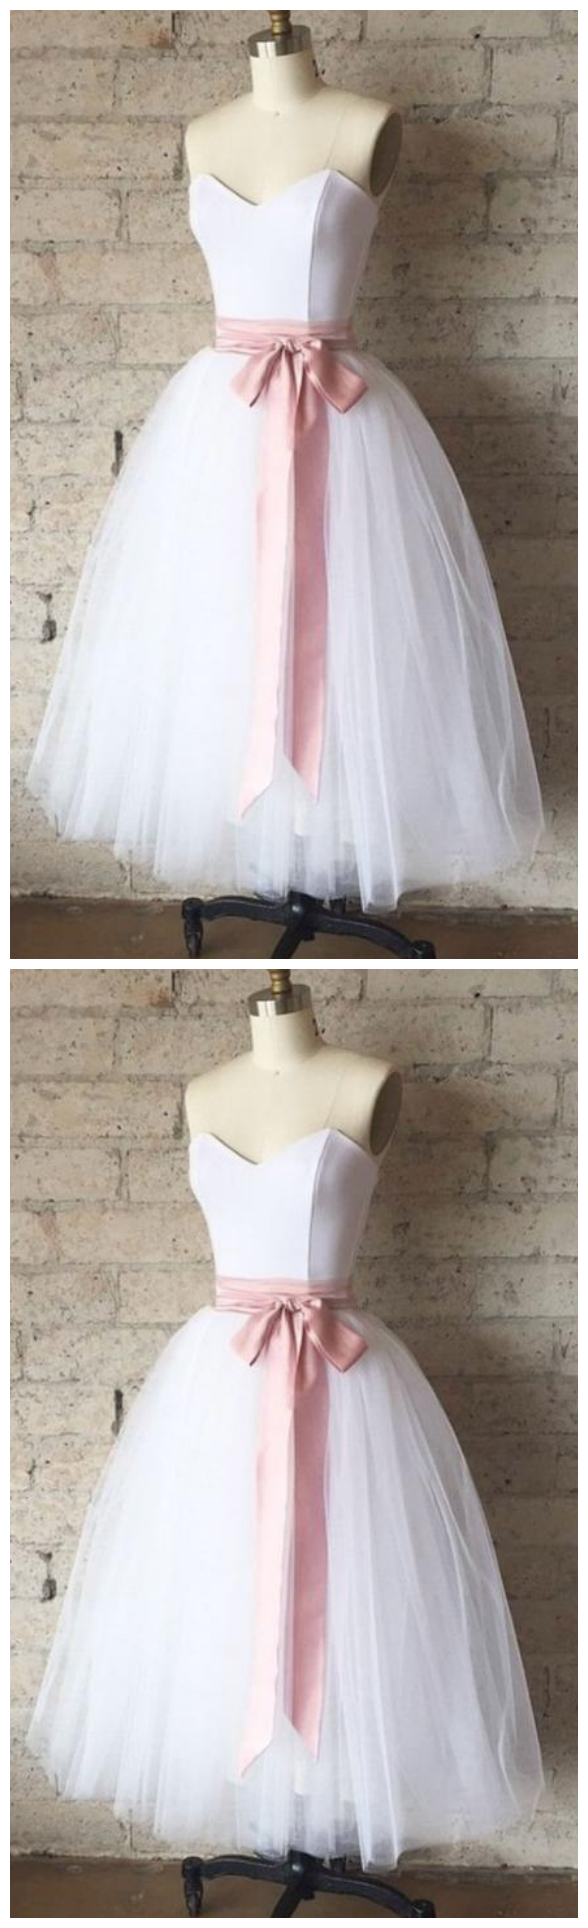 White Sweetheart Tea Length Sleeveless Homecoming Dresses A Line Prom Dresses